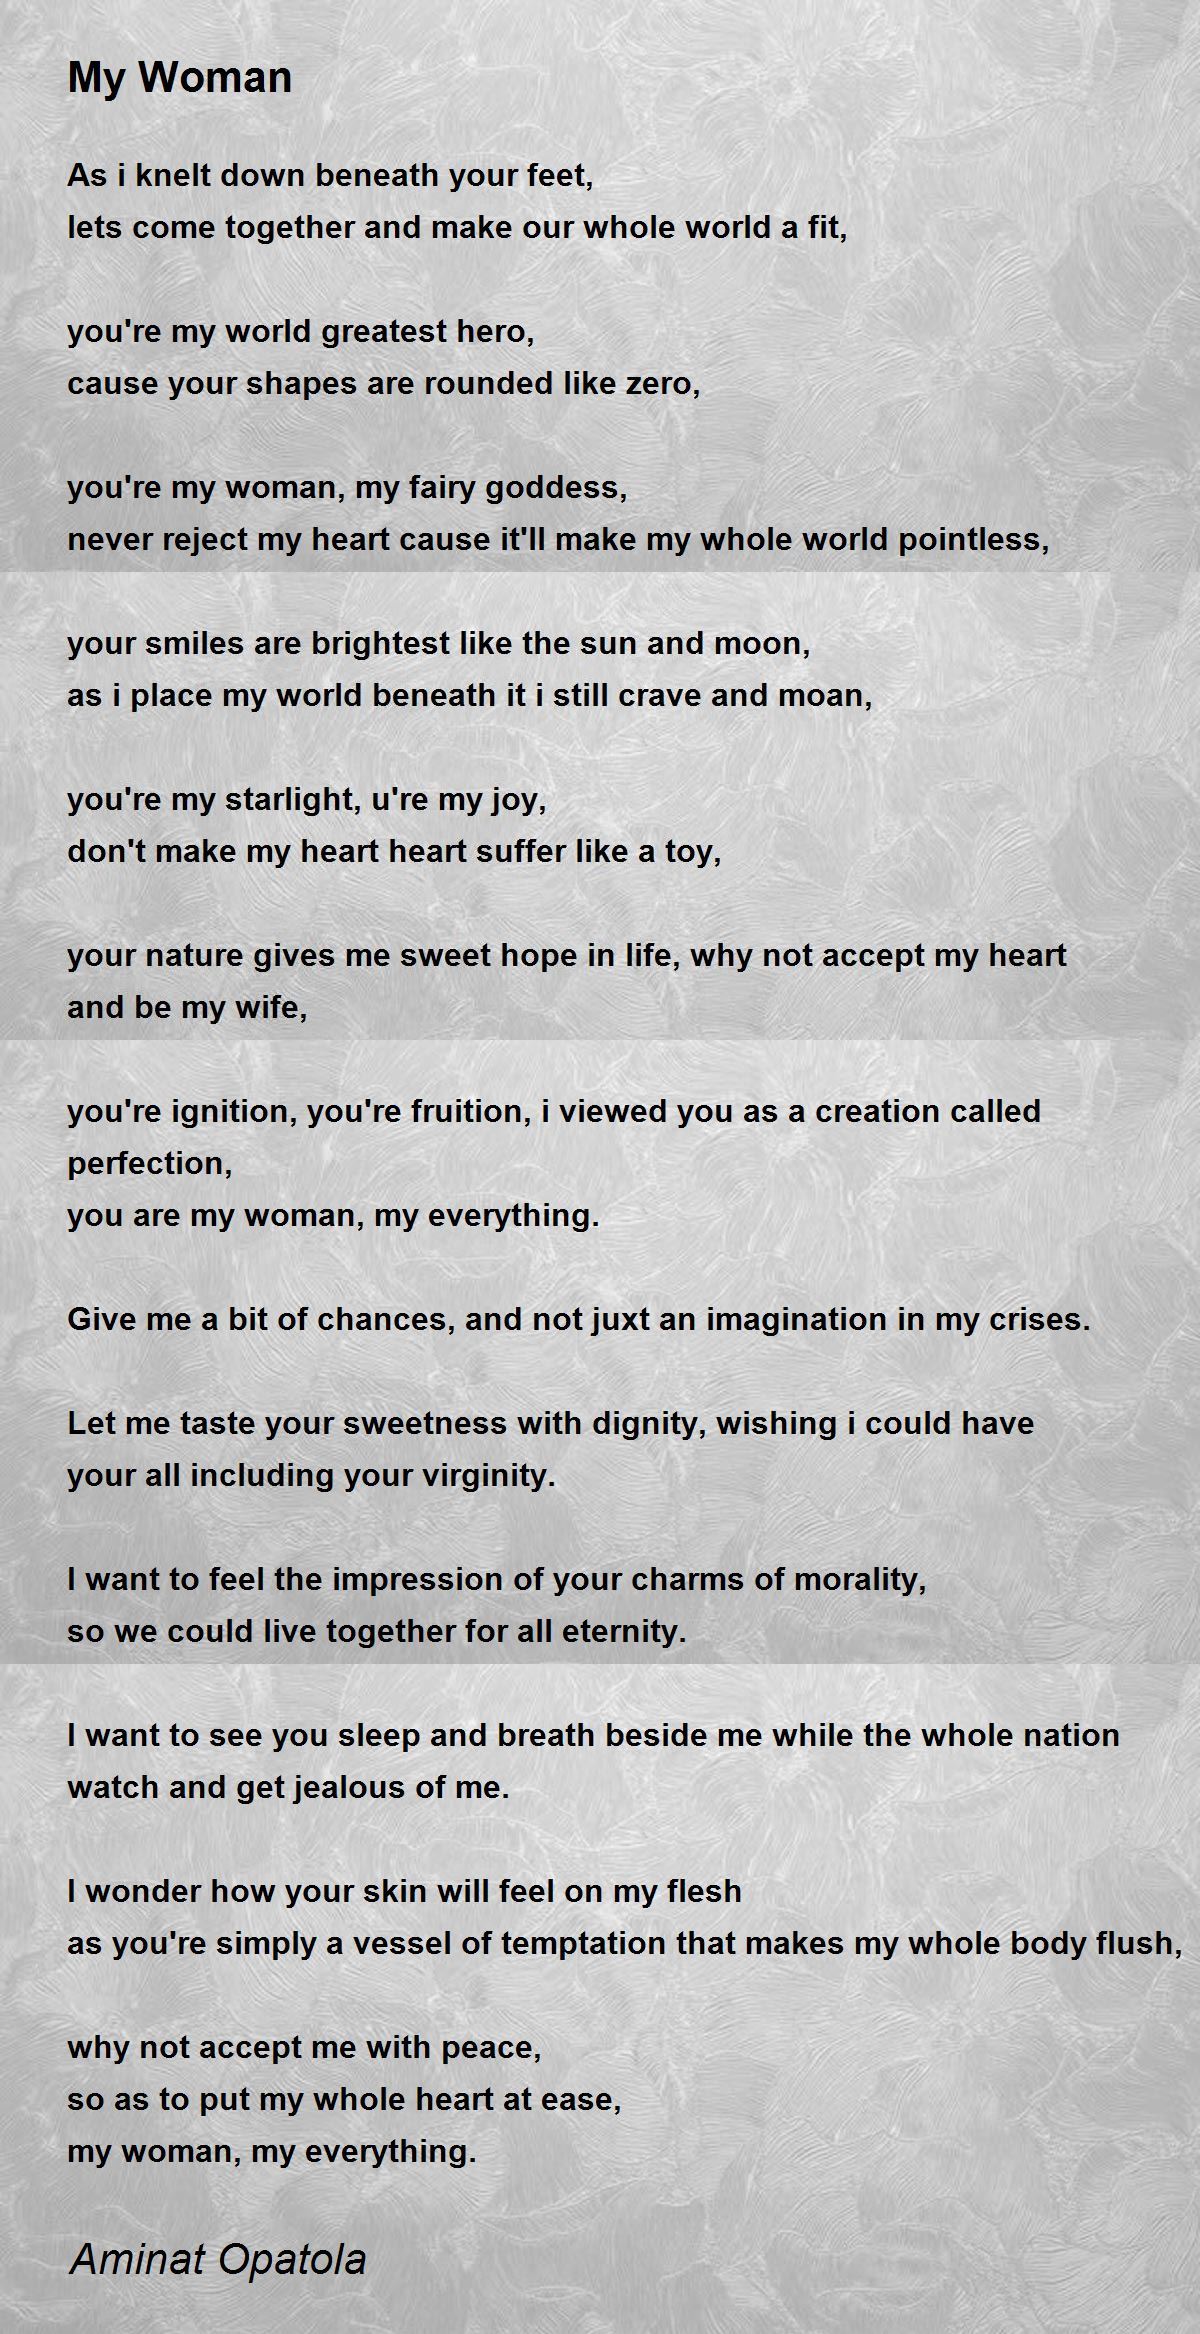 My Woman - My Woman Poem by Aminat Opatola